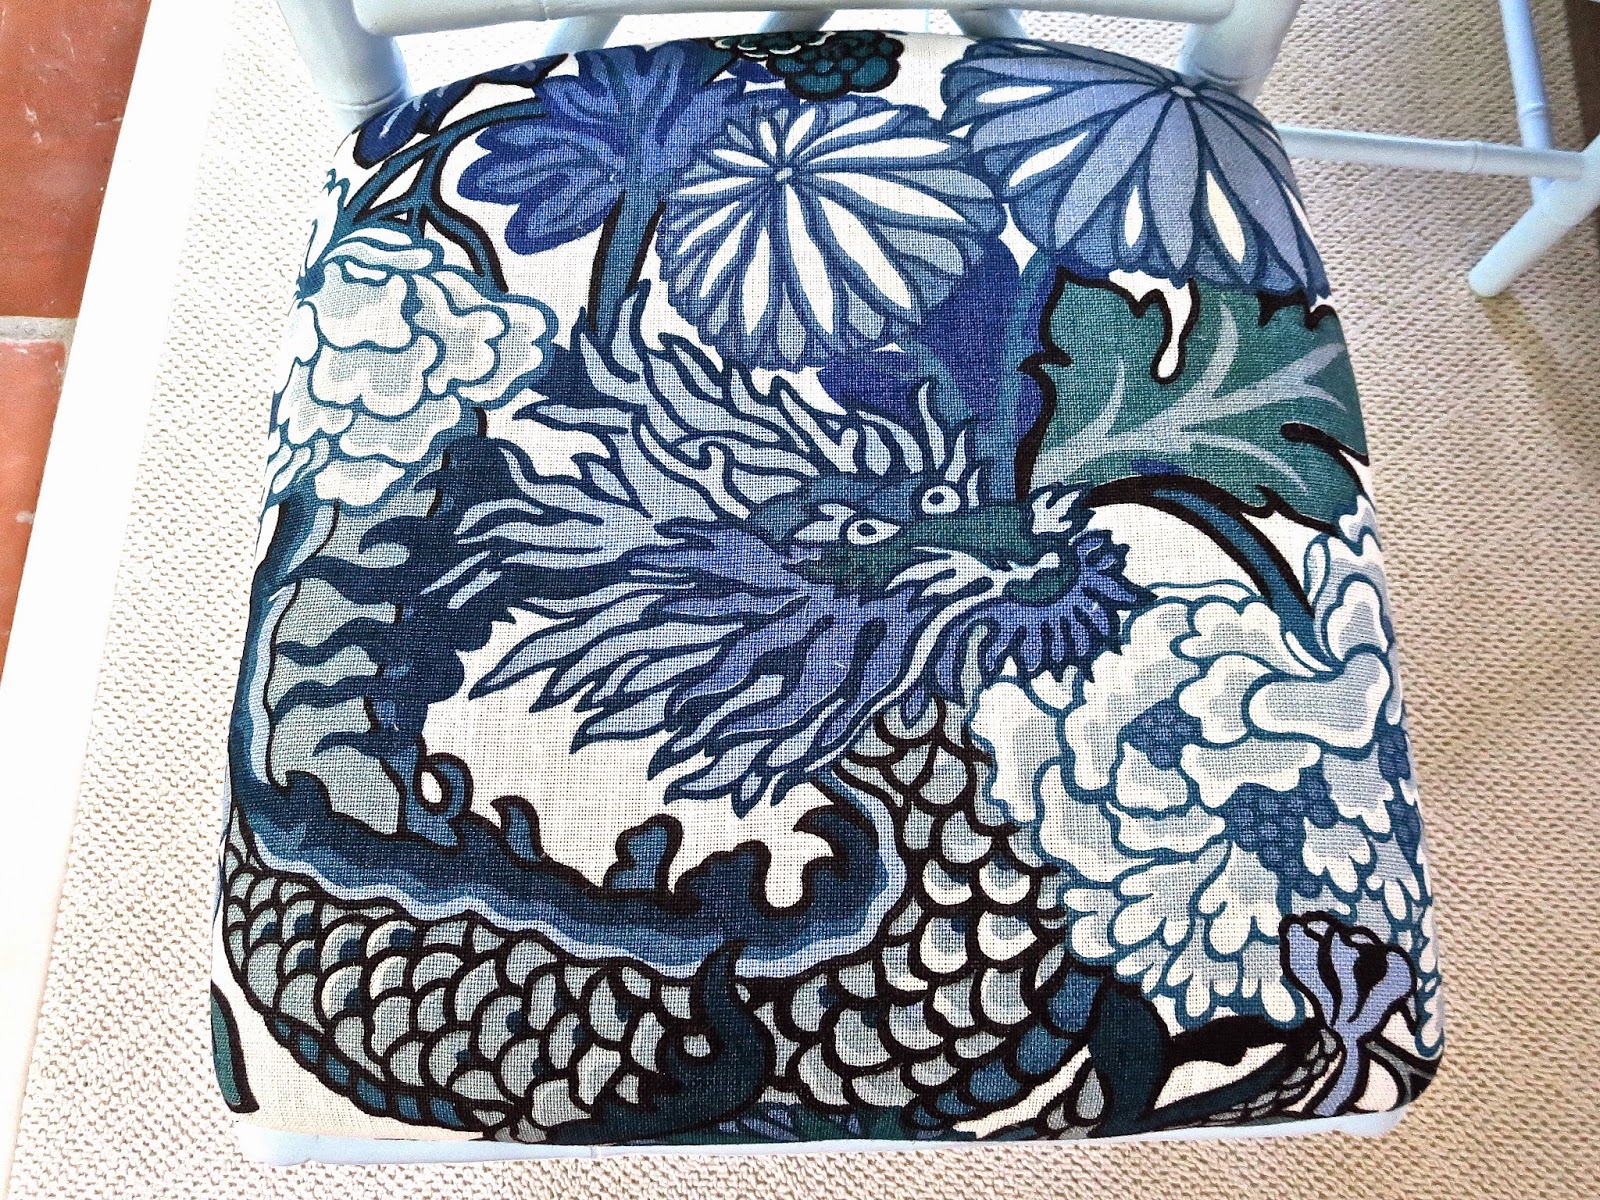 Chiang Mai Dragon fabric from Schumacher China Blue on seat cushion